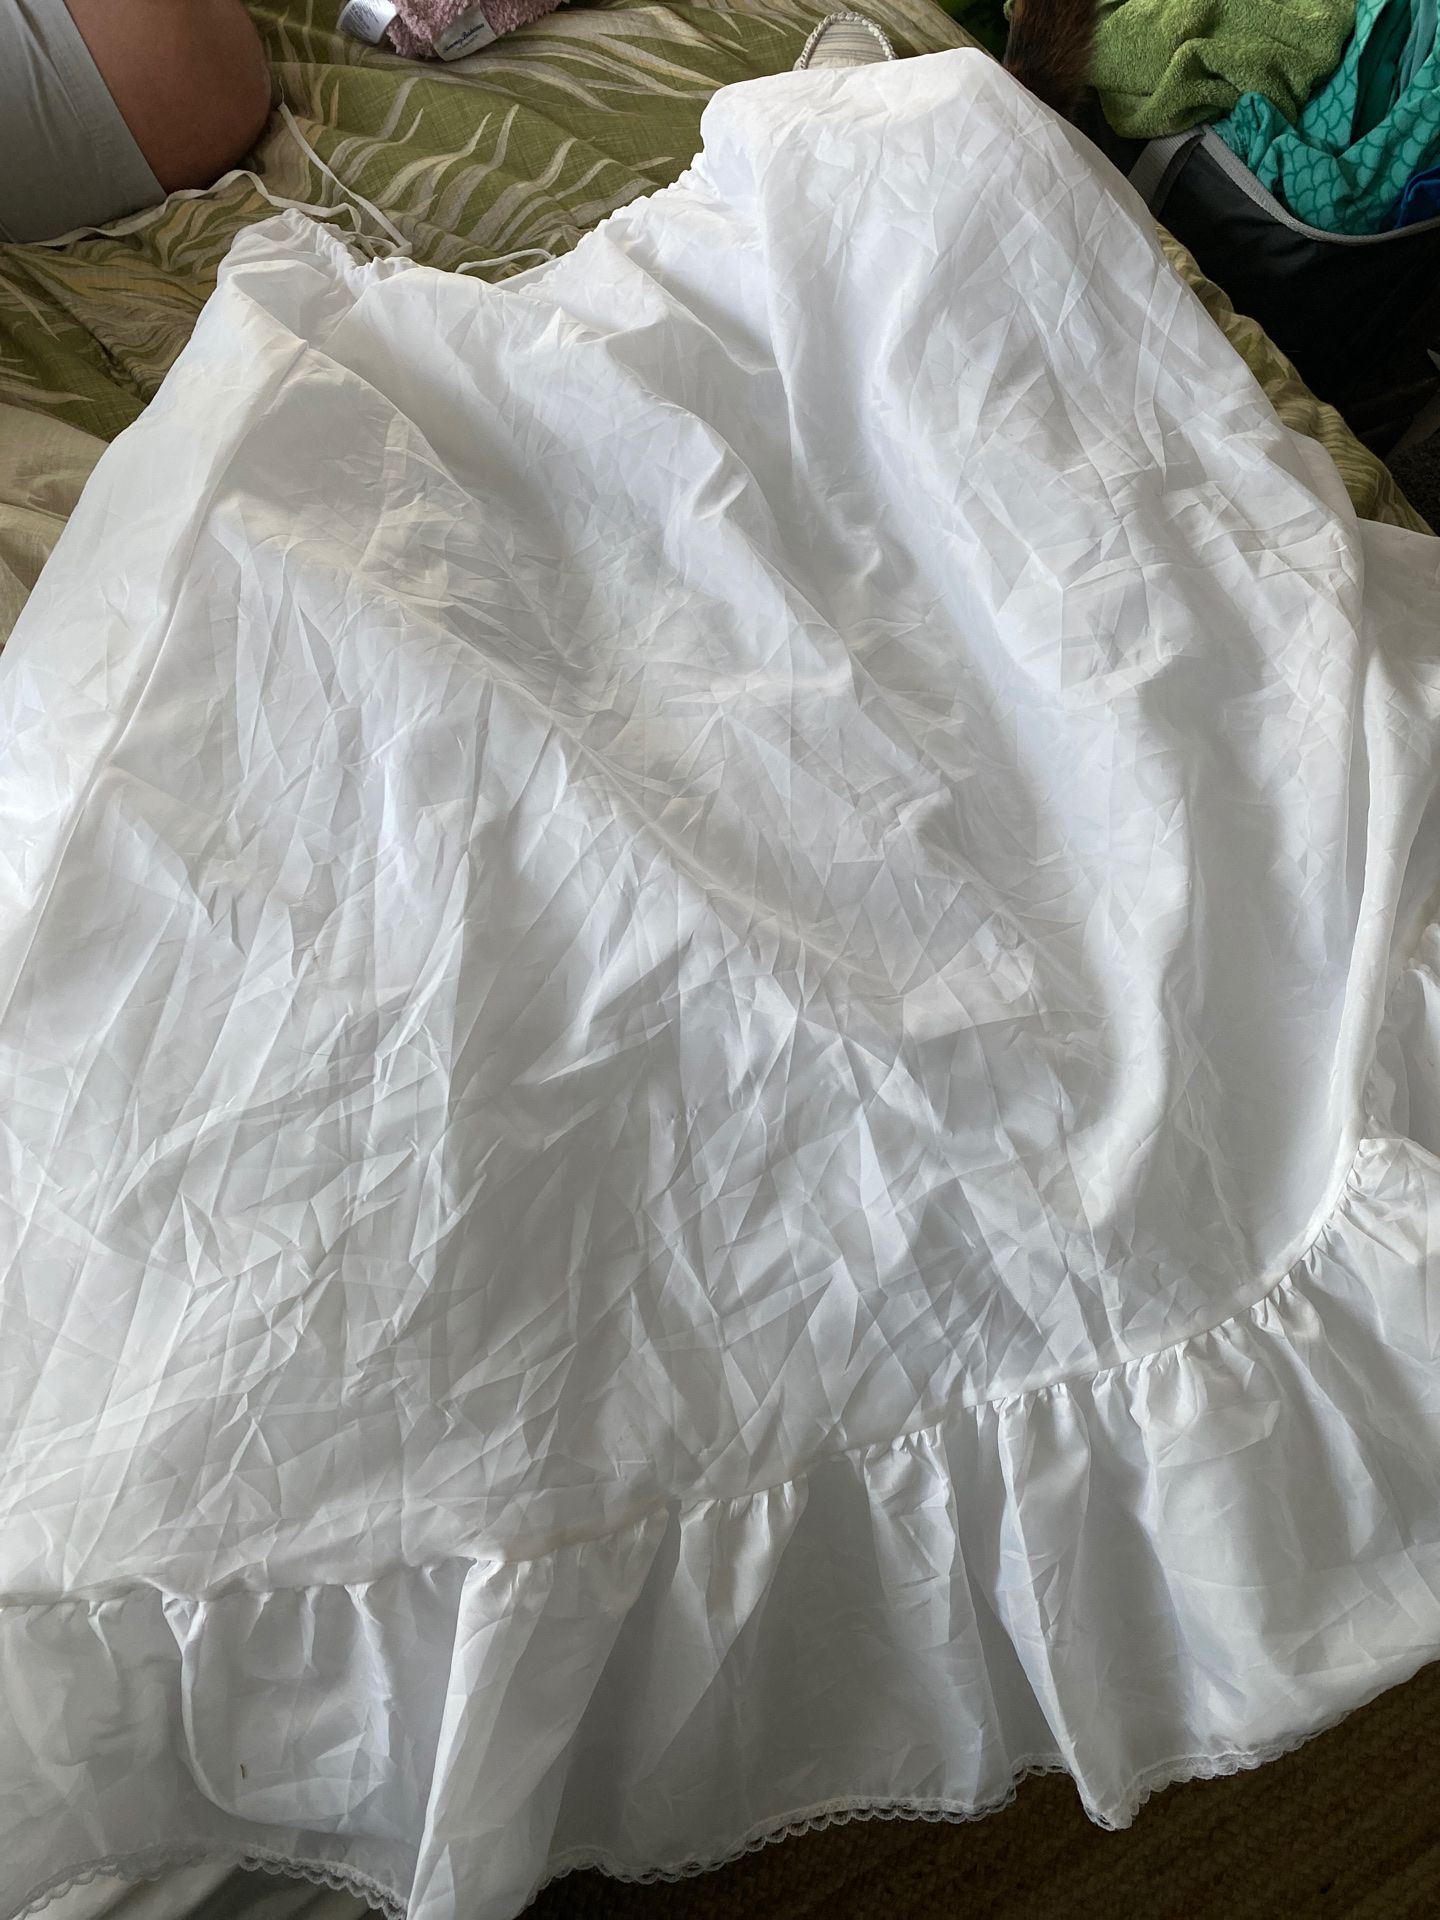 Bridal gown petticoat